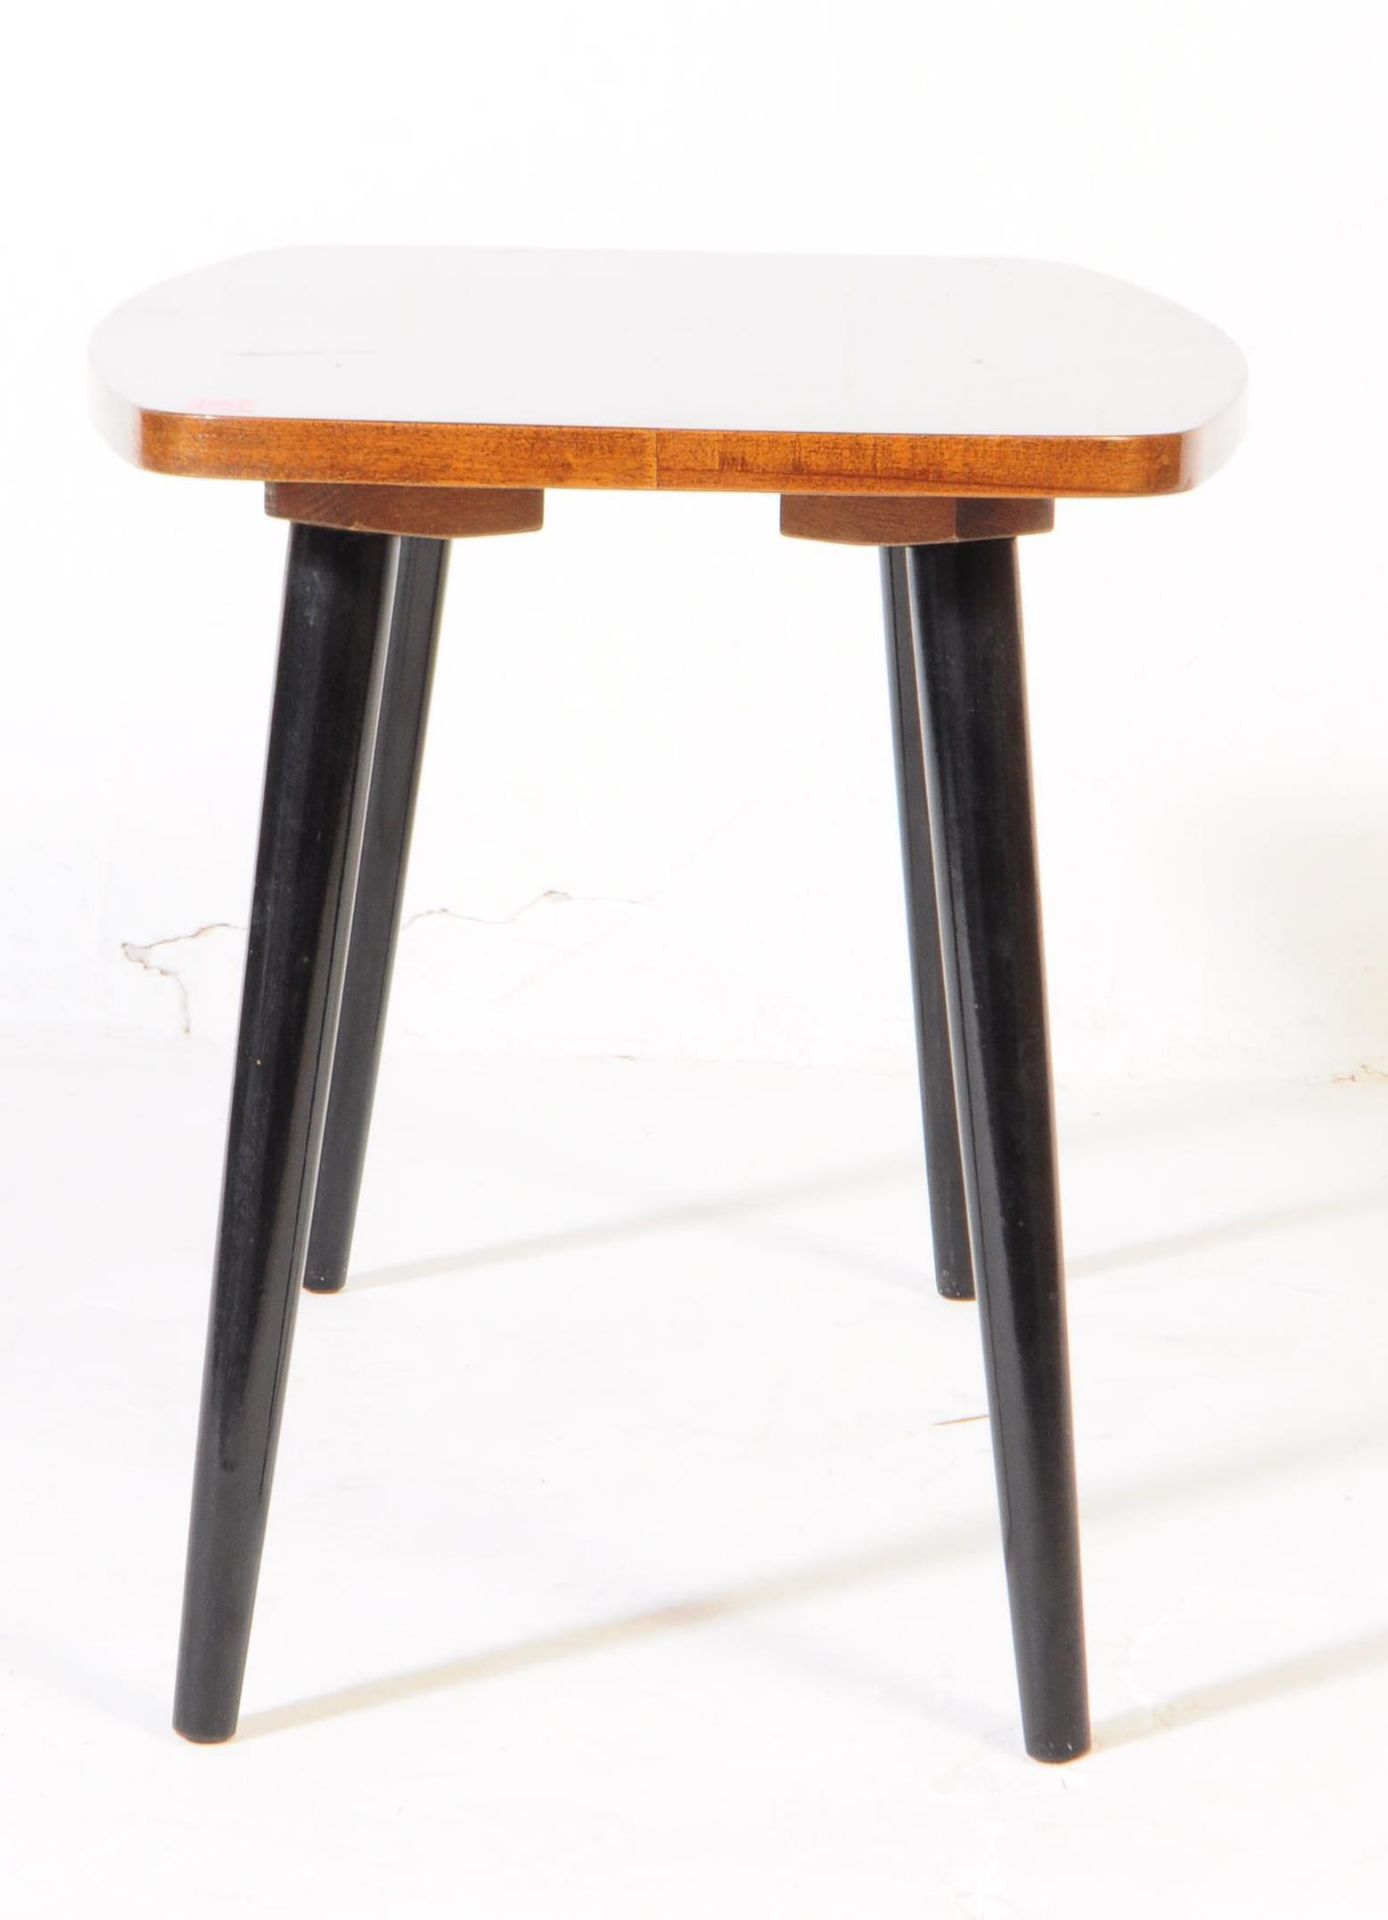 MID CENTURY WALNUT PANEL DANSETTE LEG COFFEE TABLE - Image 4 of 4